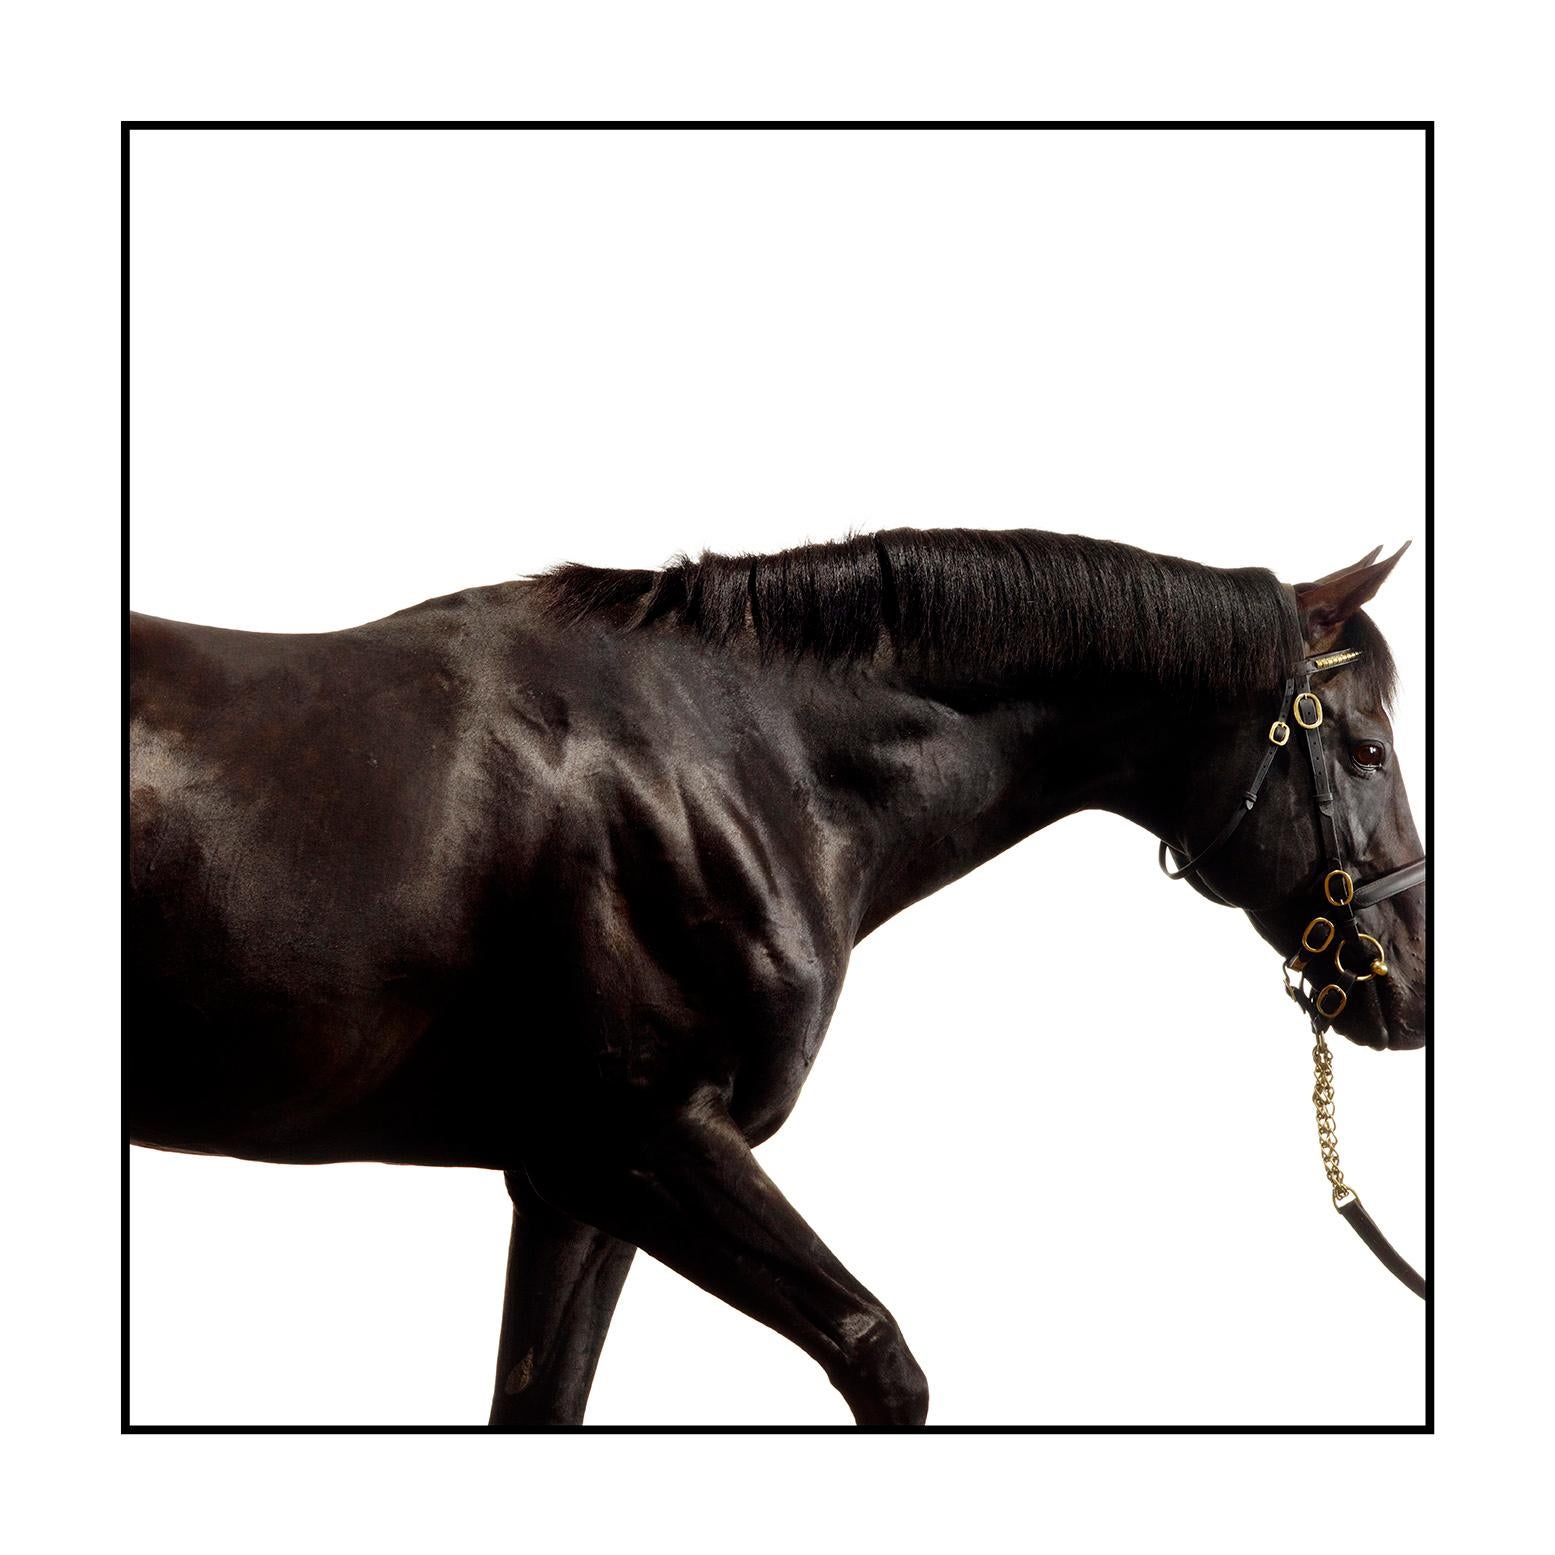 Cape Cross - Studio Portrait, Stallion, Champion, Equine Art Print Unframed - Black Portrait Photograph by John Reardon